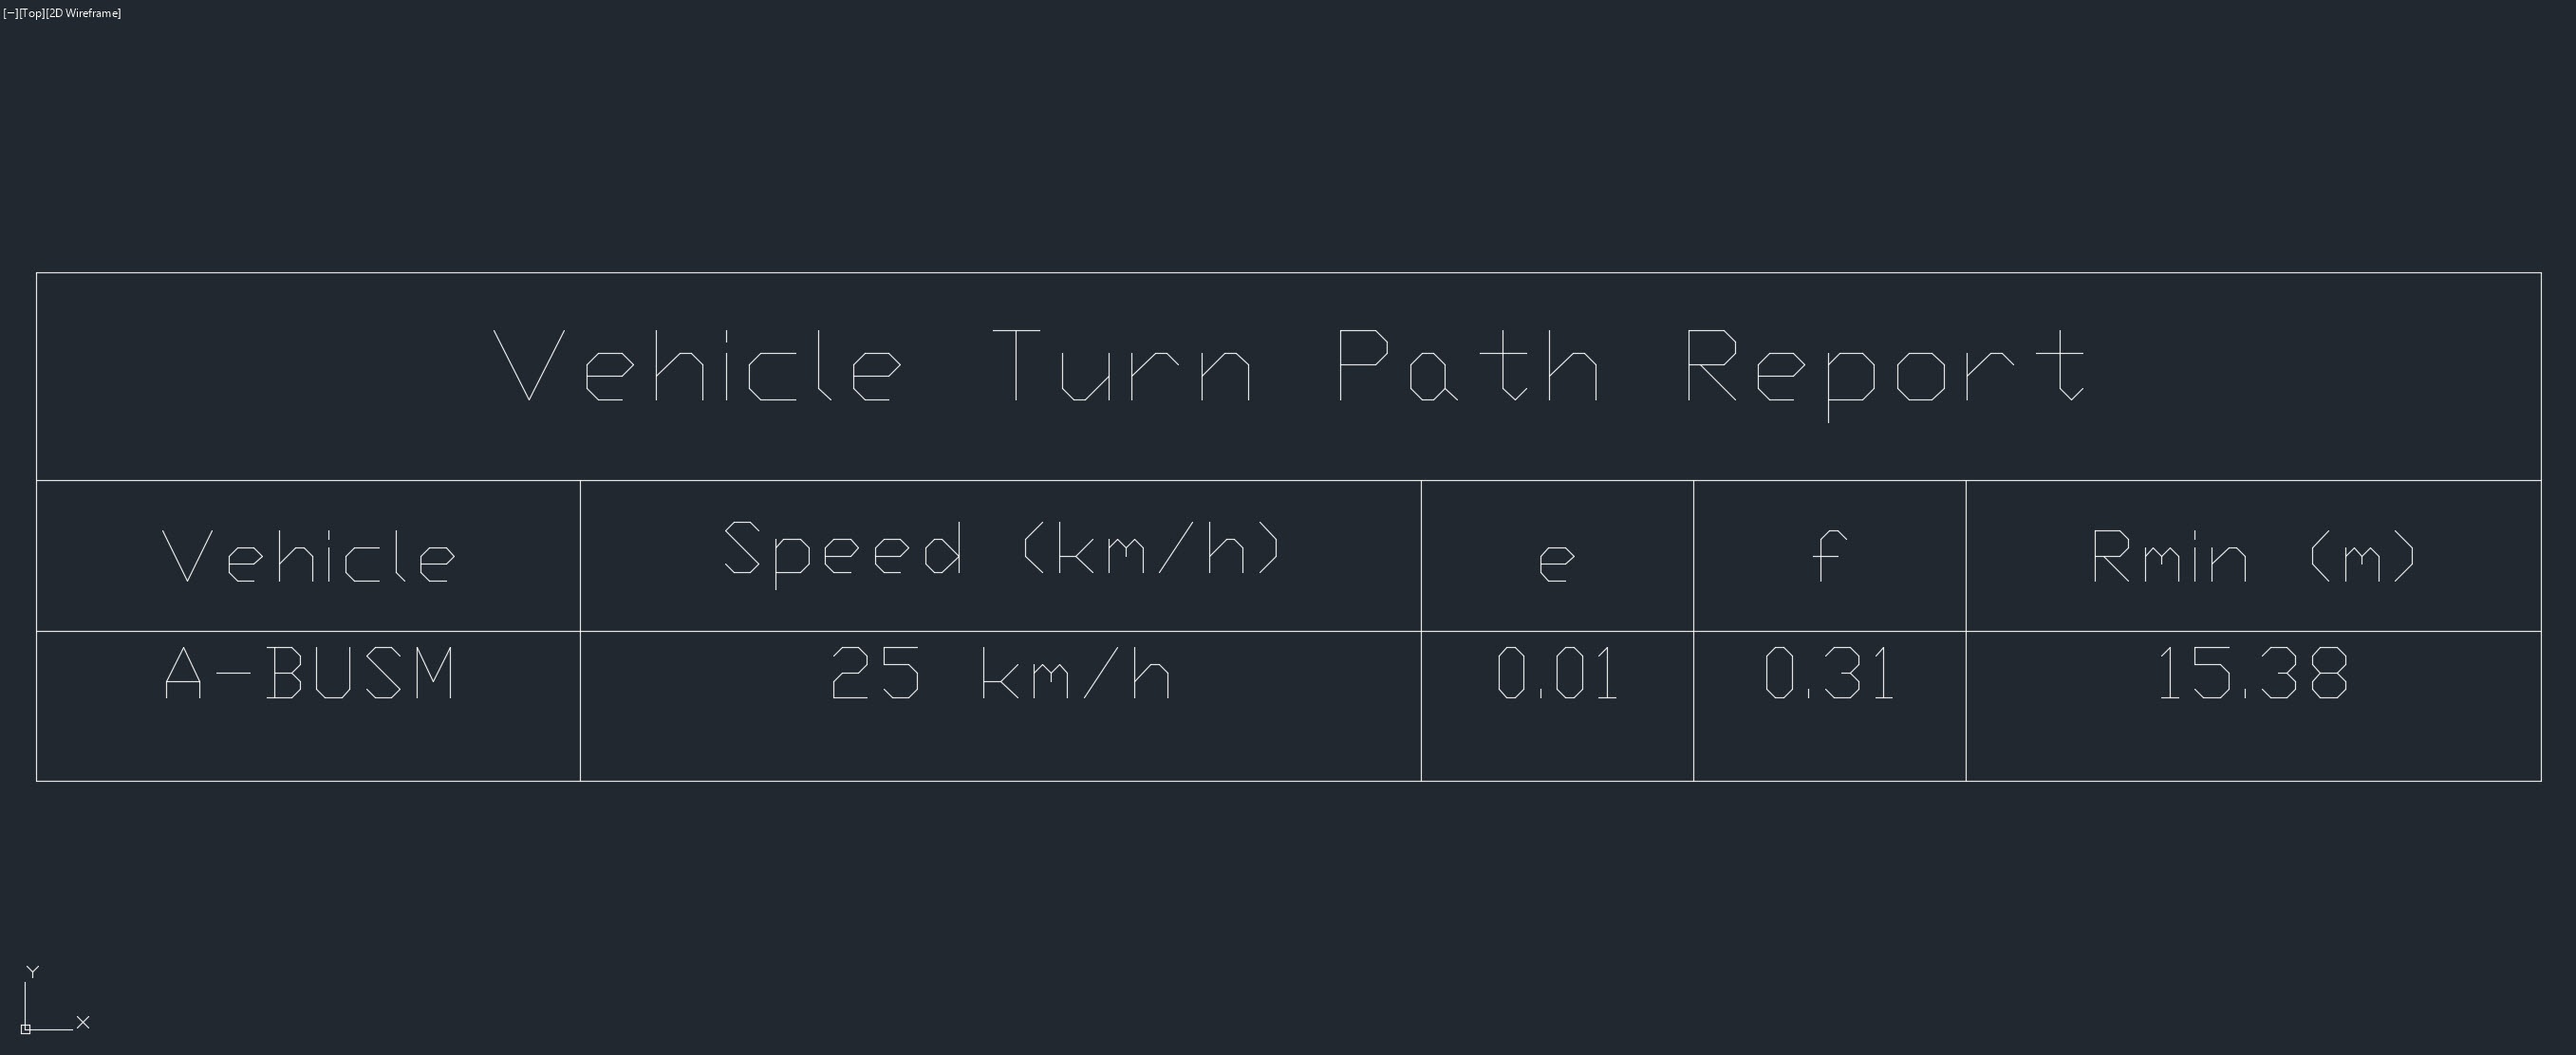 https://0901.nccdn.net/4_2/000/000/076/de9/Vehicle-Turn-Path-Report-2714x1112.jpg